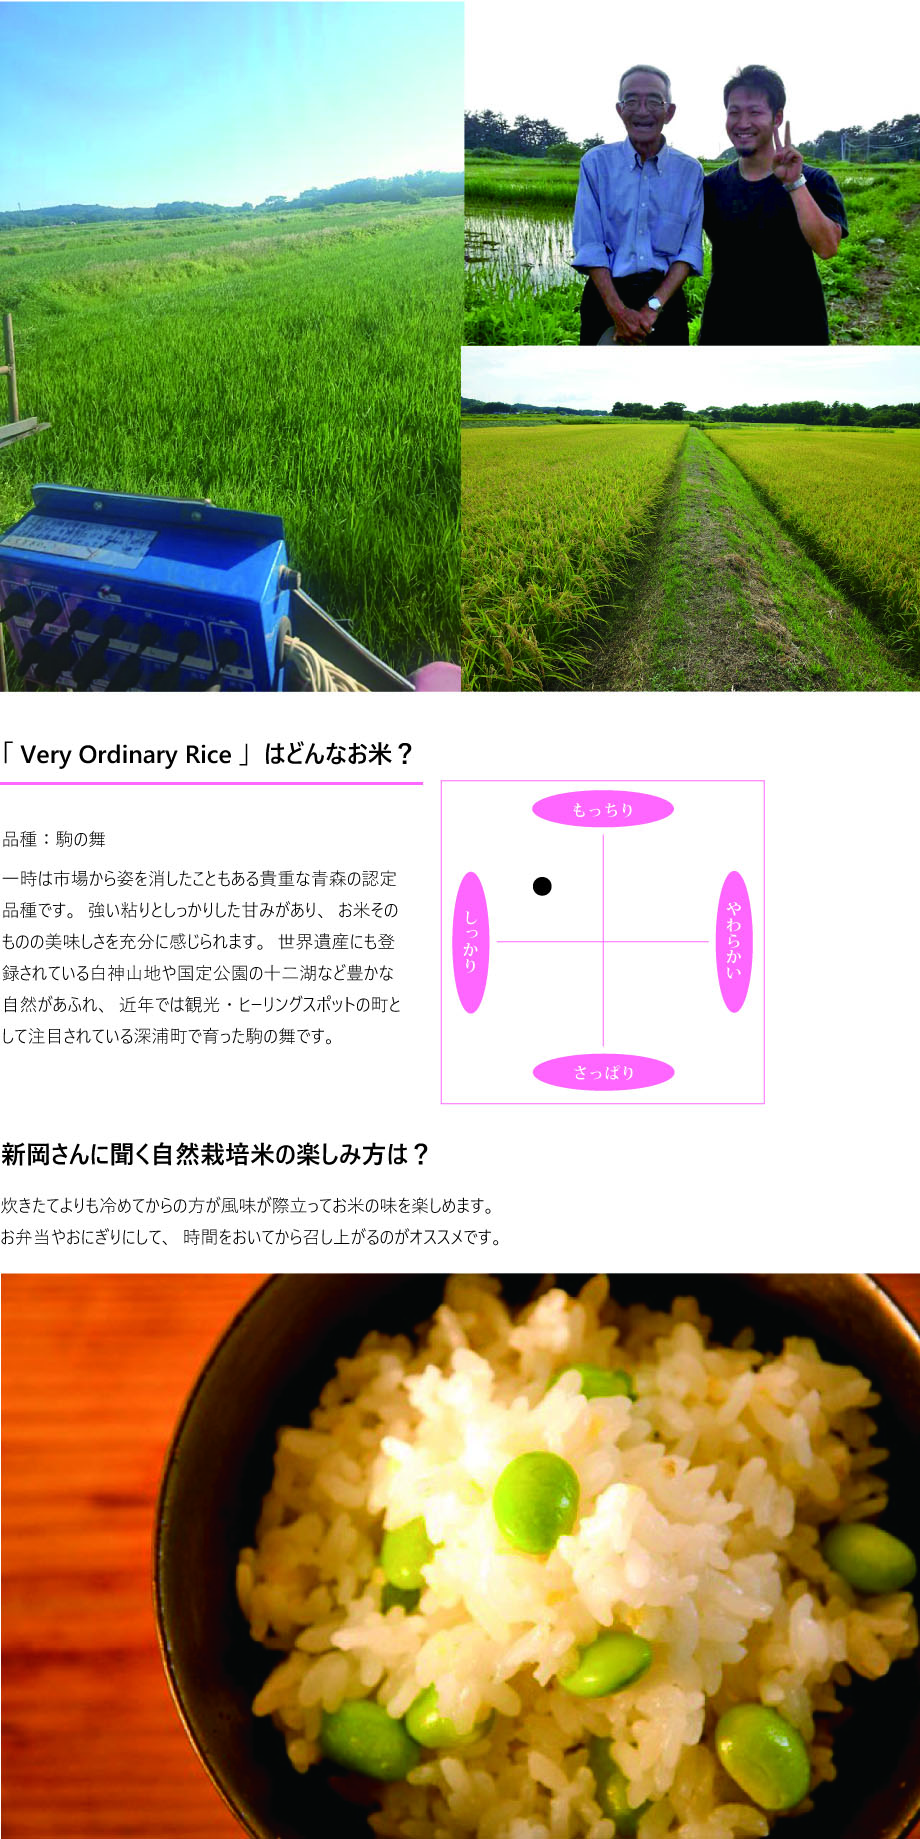 (R04産)Very Ordinary Rice白米10kg